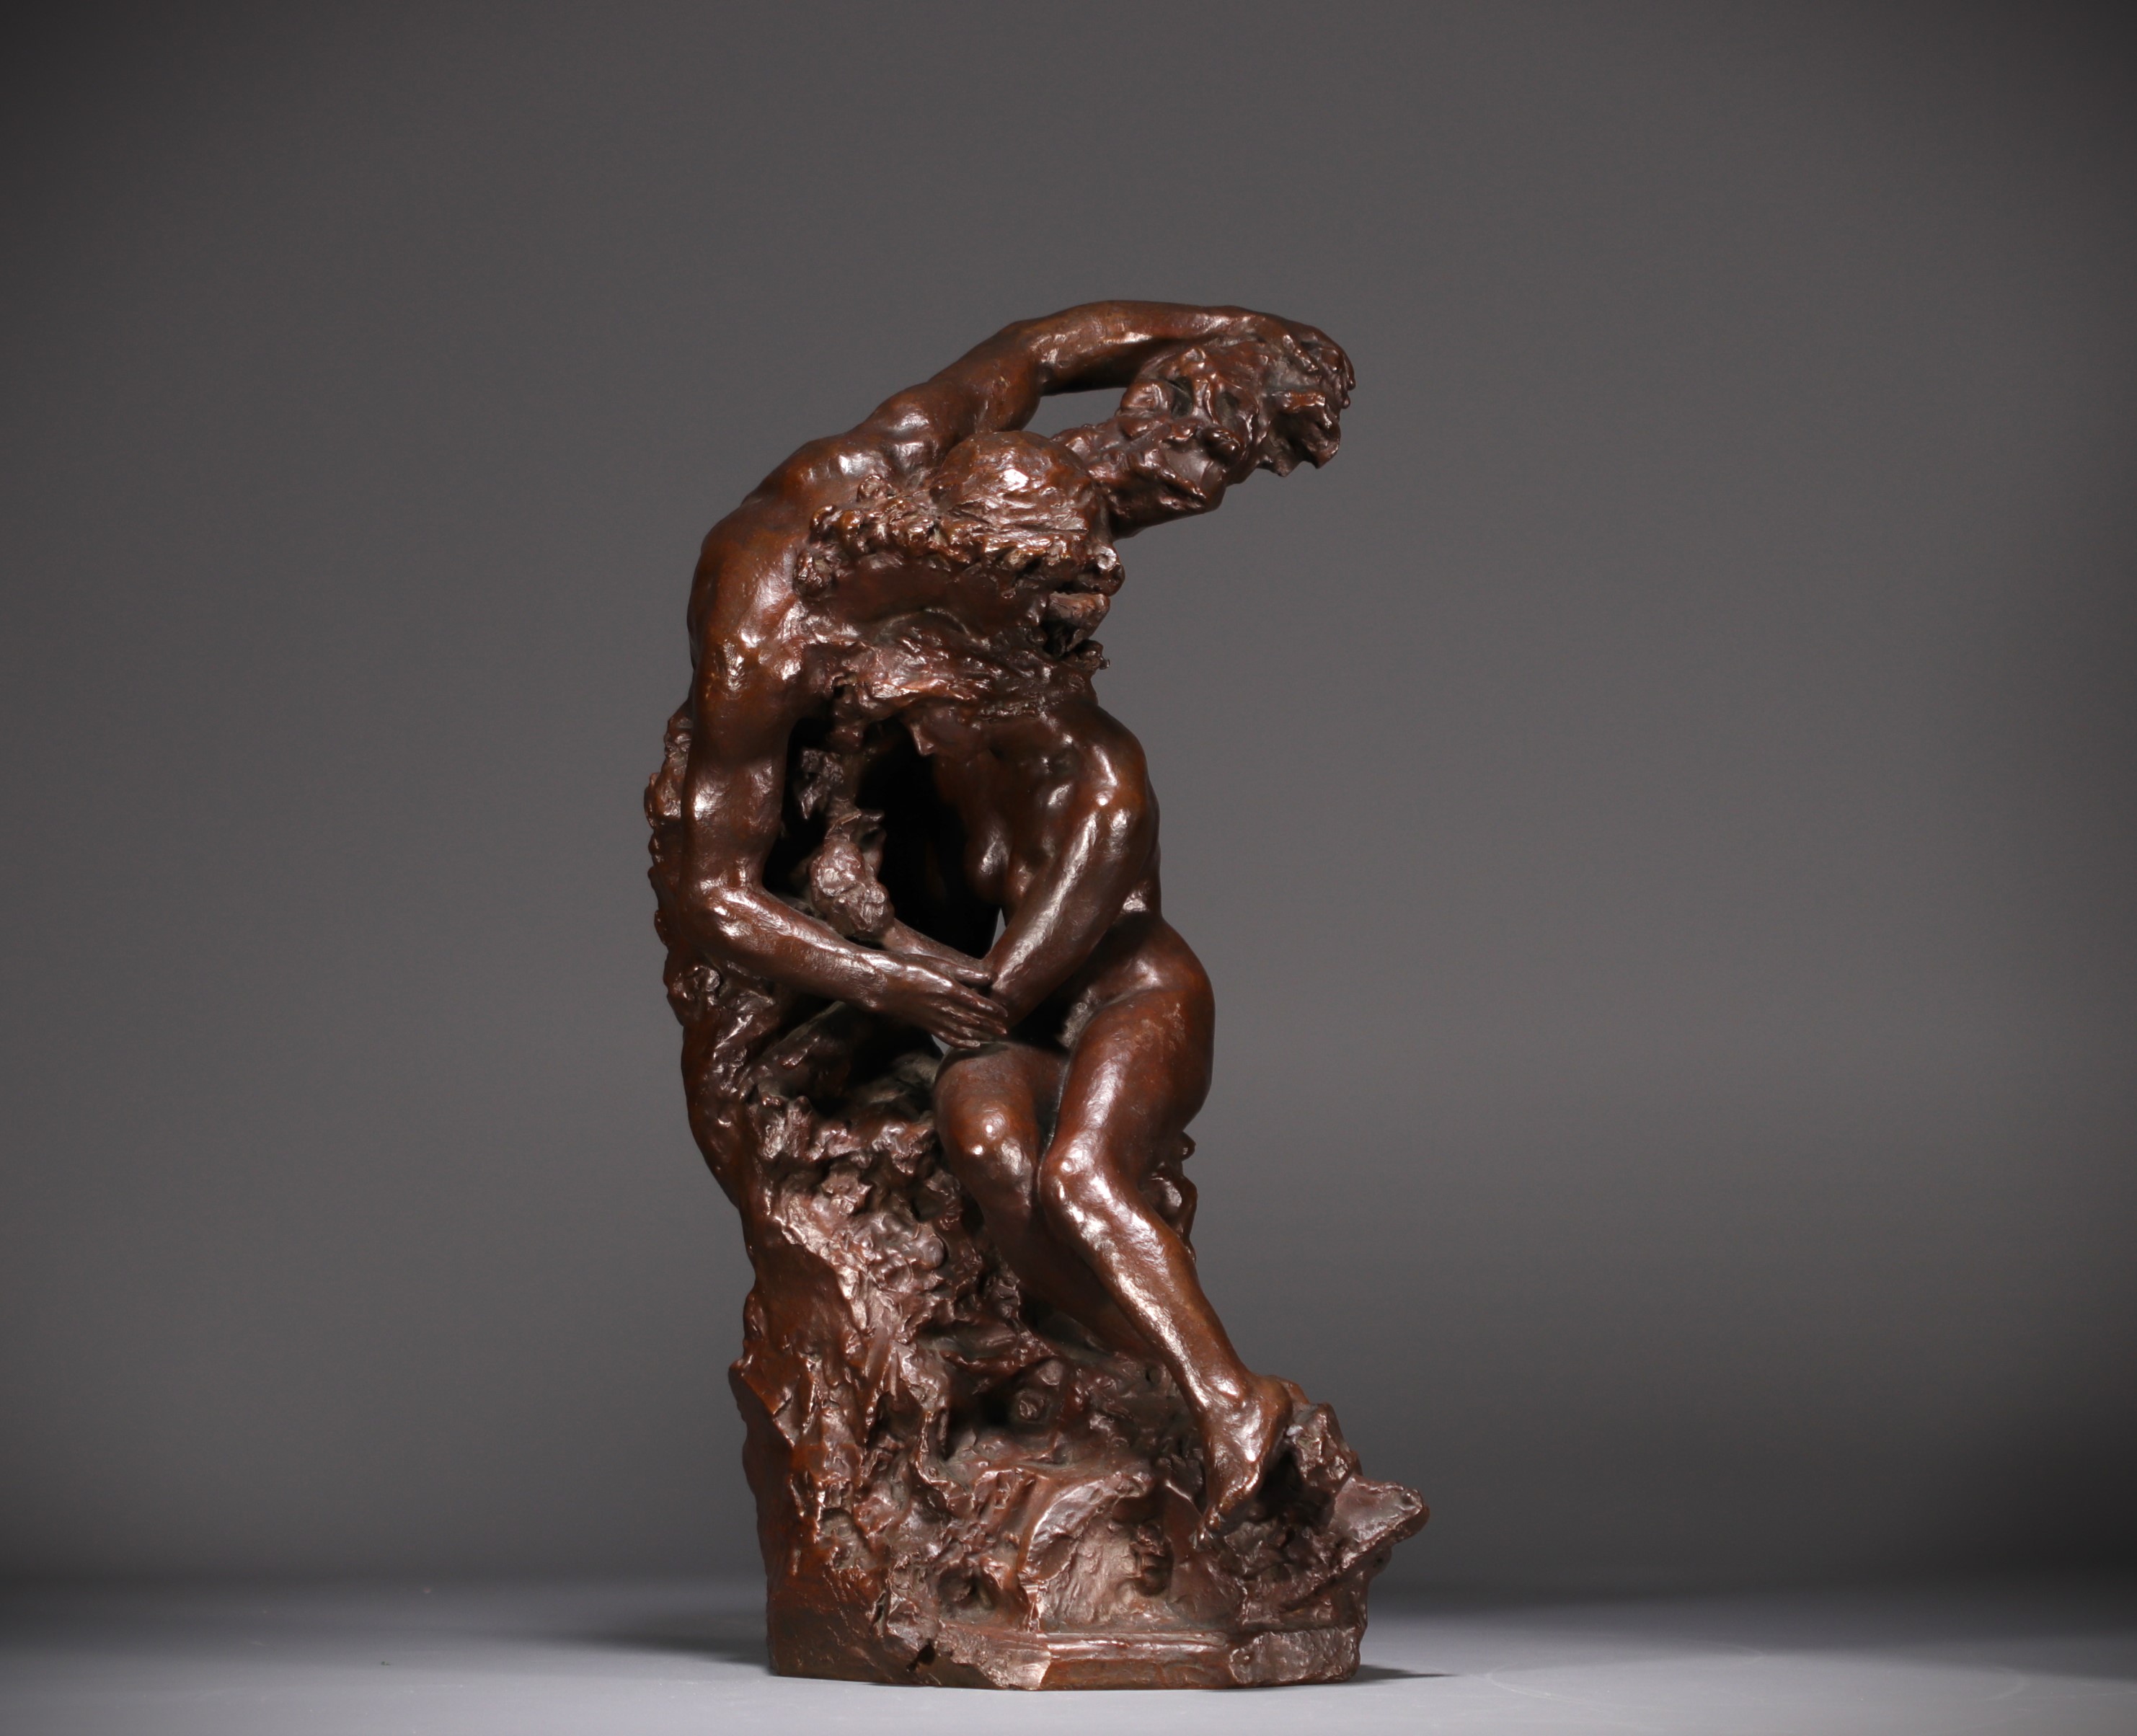 Jules DESBOIS (1851-1935) "L'Amour" Lost wax bronze, signed J. Desbois, nÂ°1, Stamp Hebrard foundry.